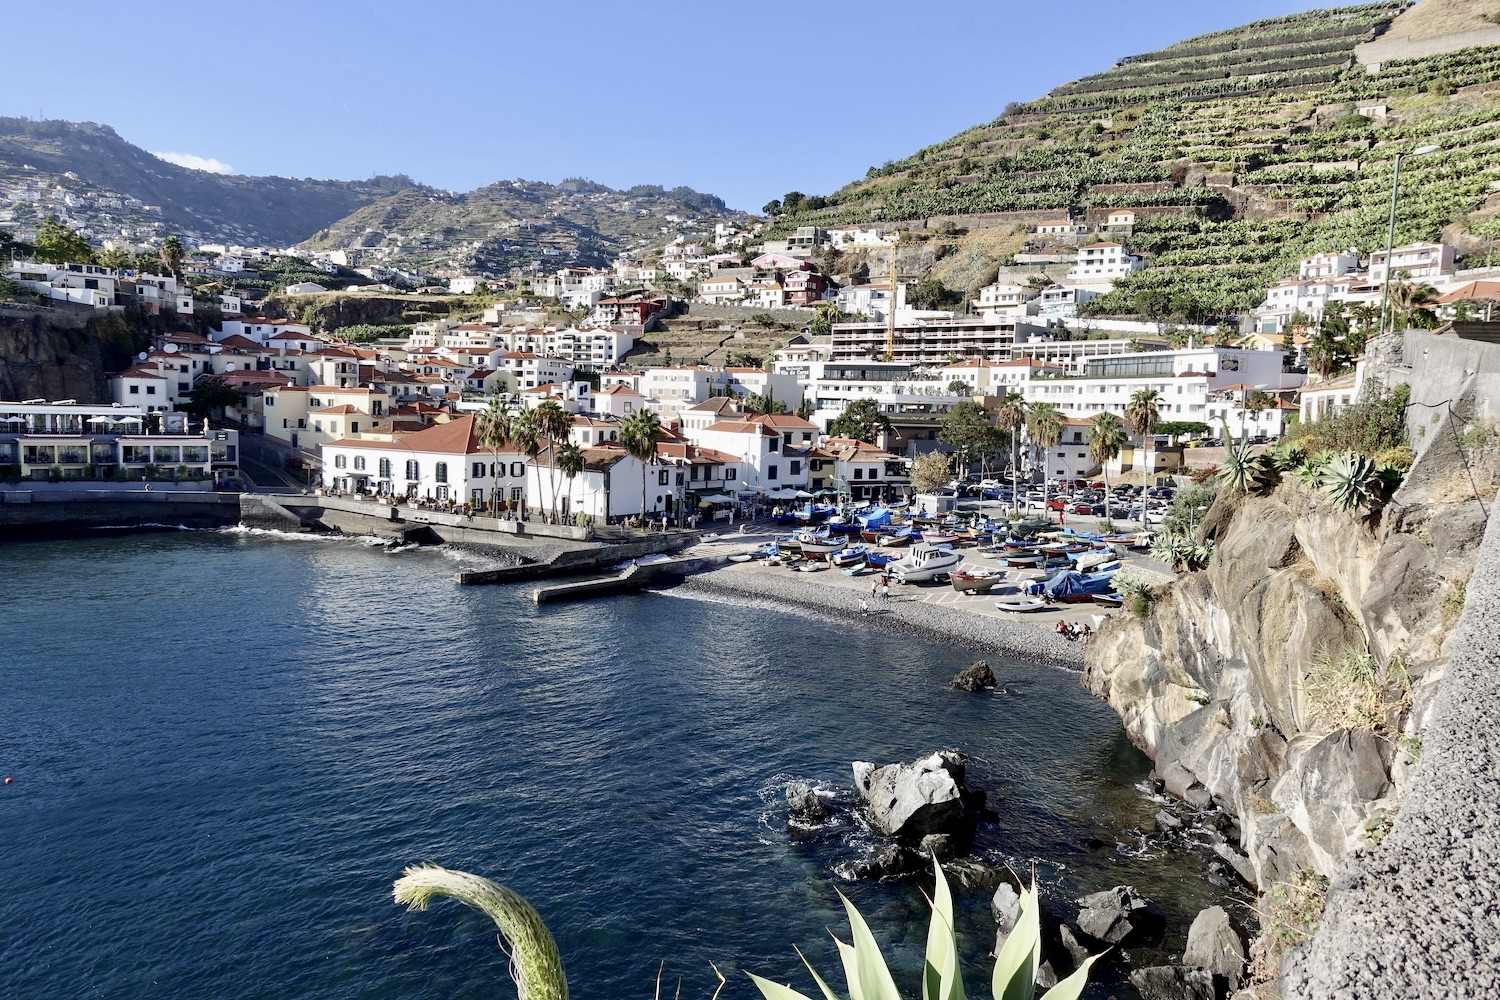 coastal fishing village of Cāmara De Lobos - visit Madeira